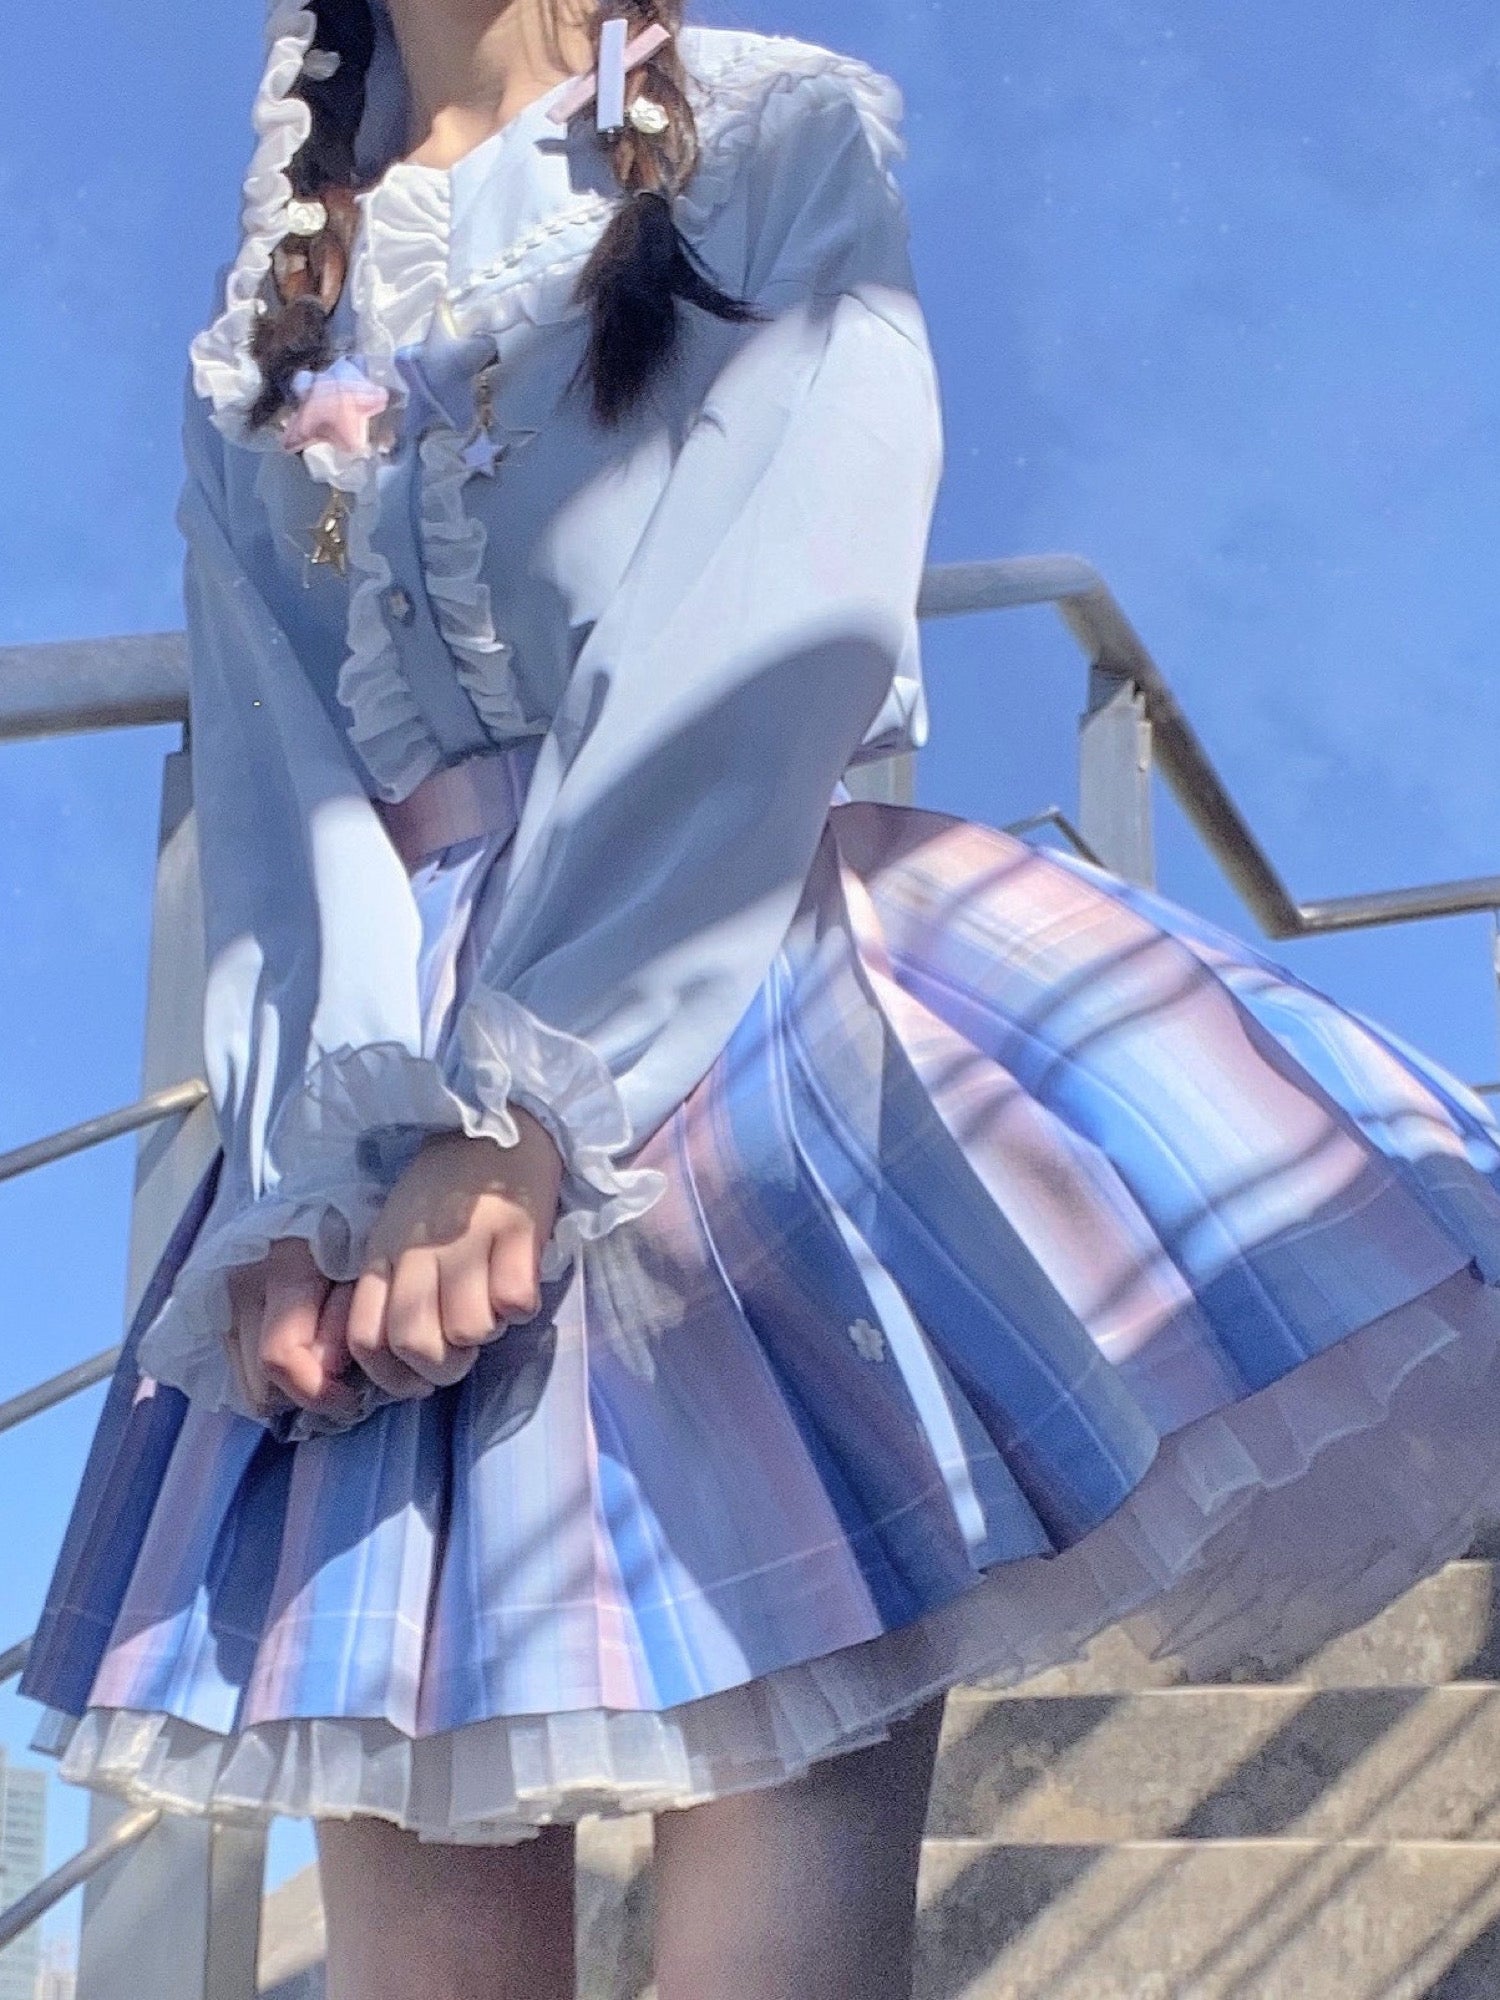 Sakura Lollipop JK Uniform Blouse with Metal Star Pendants-ntbhshop